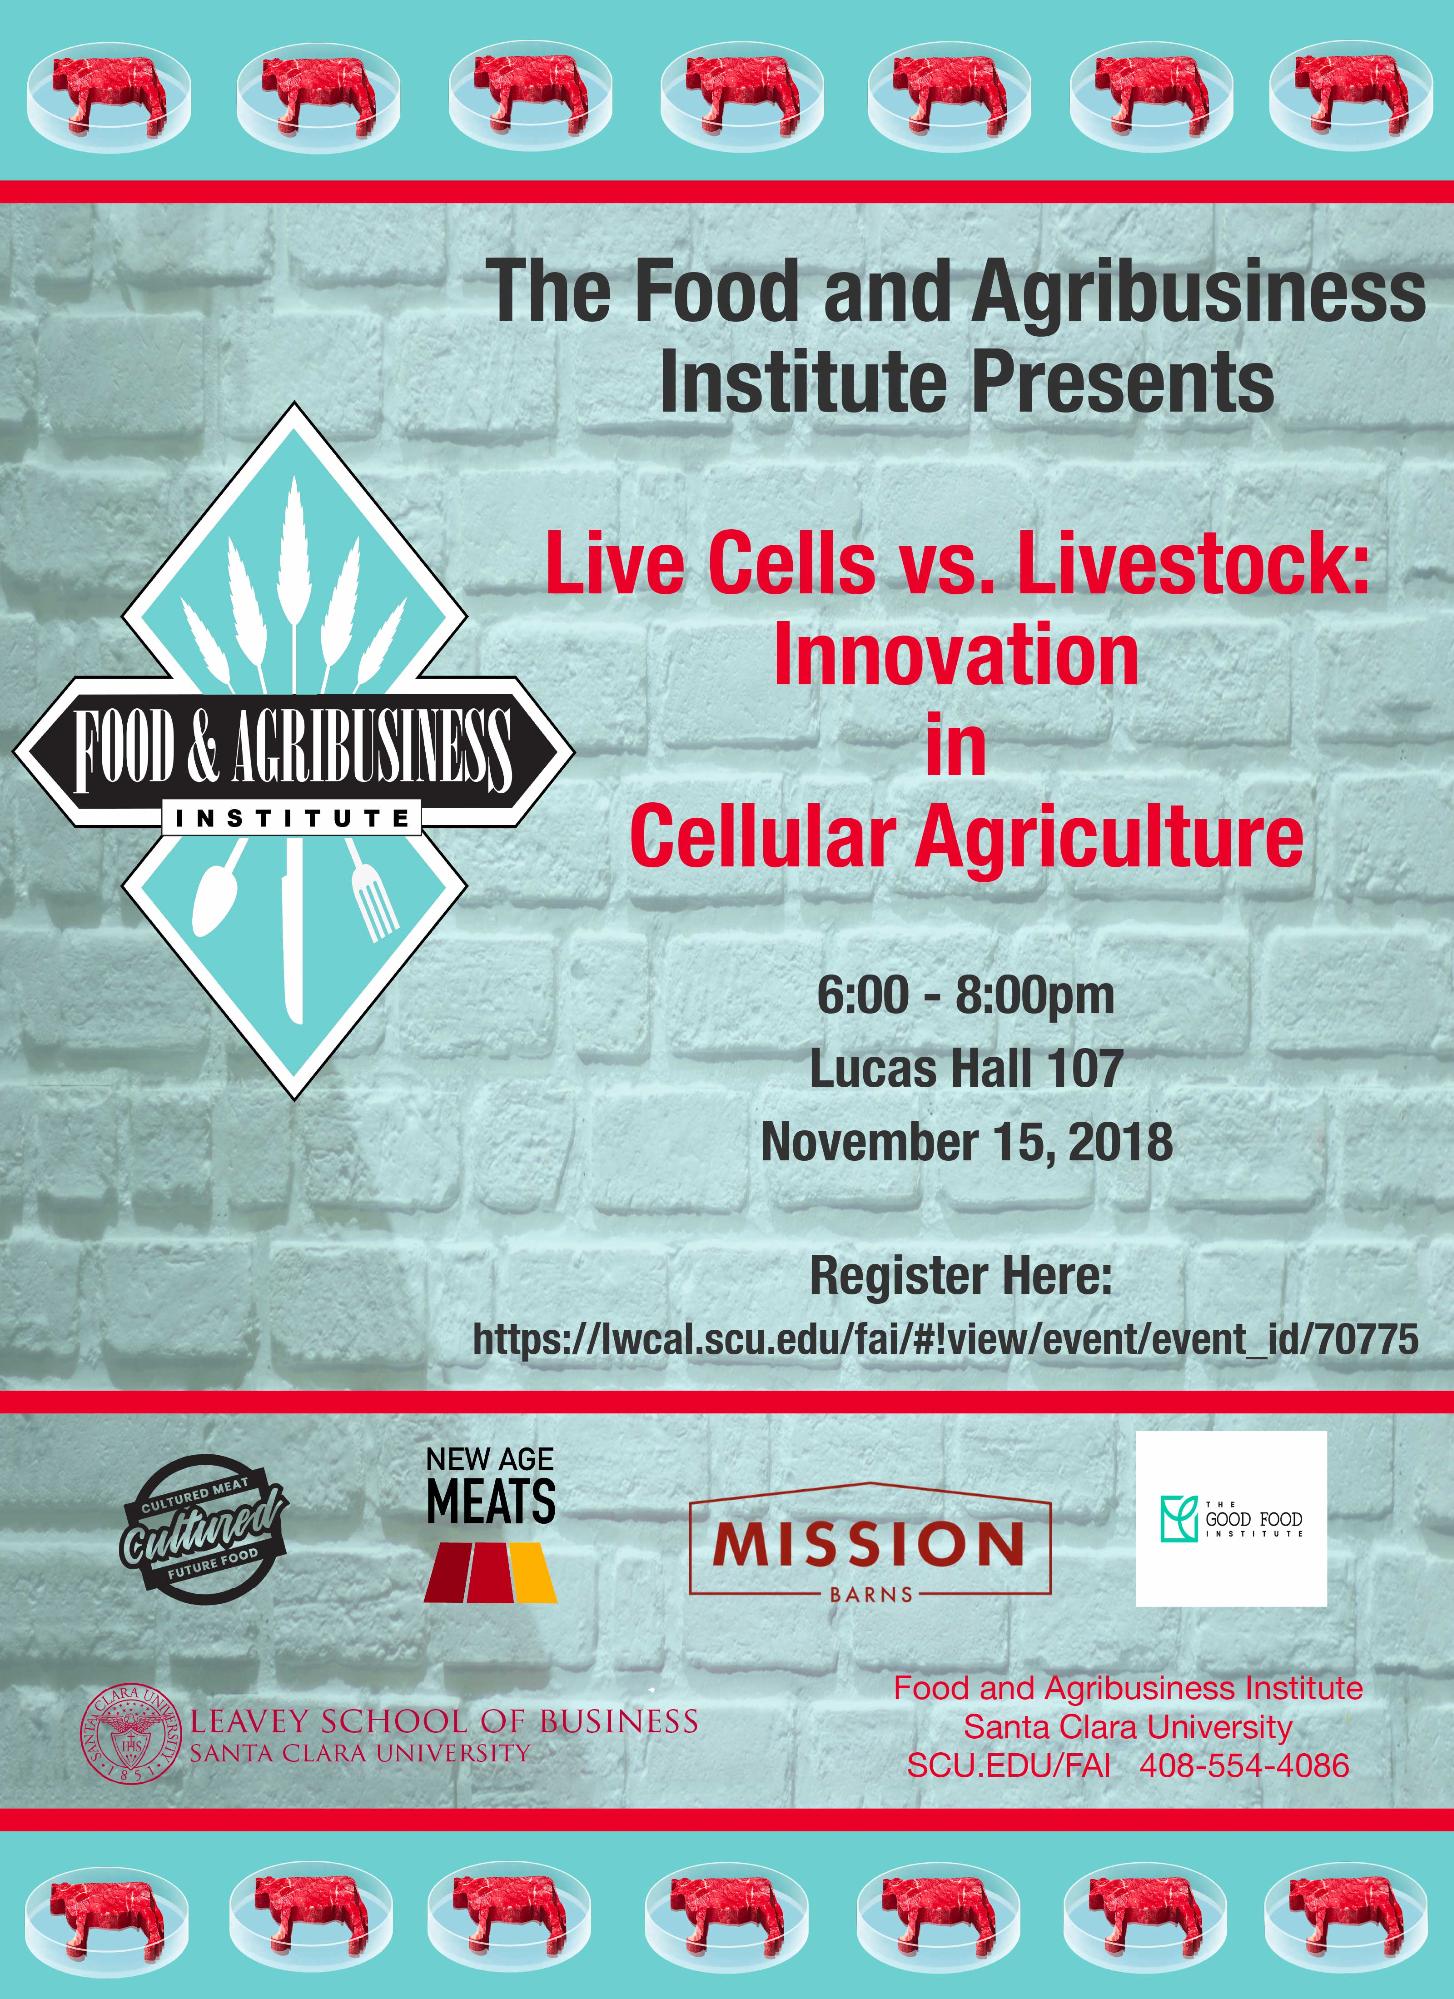 Cellular meat vs. livestock event flyer image link to story